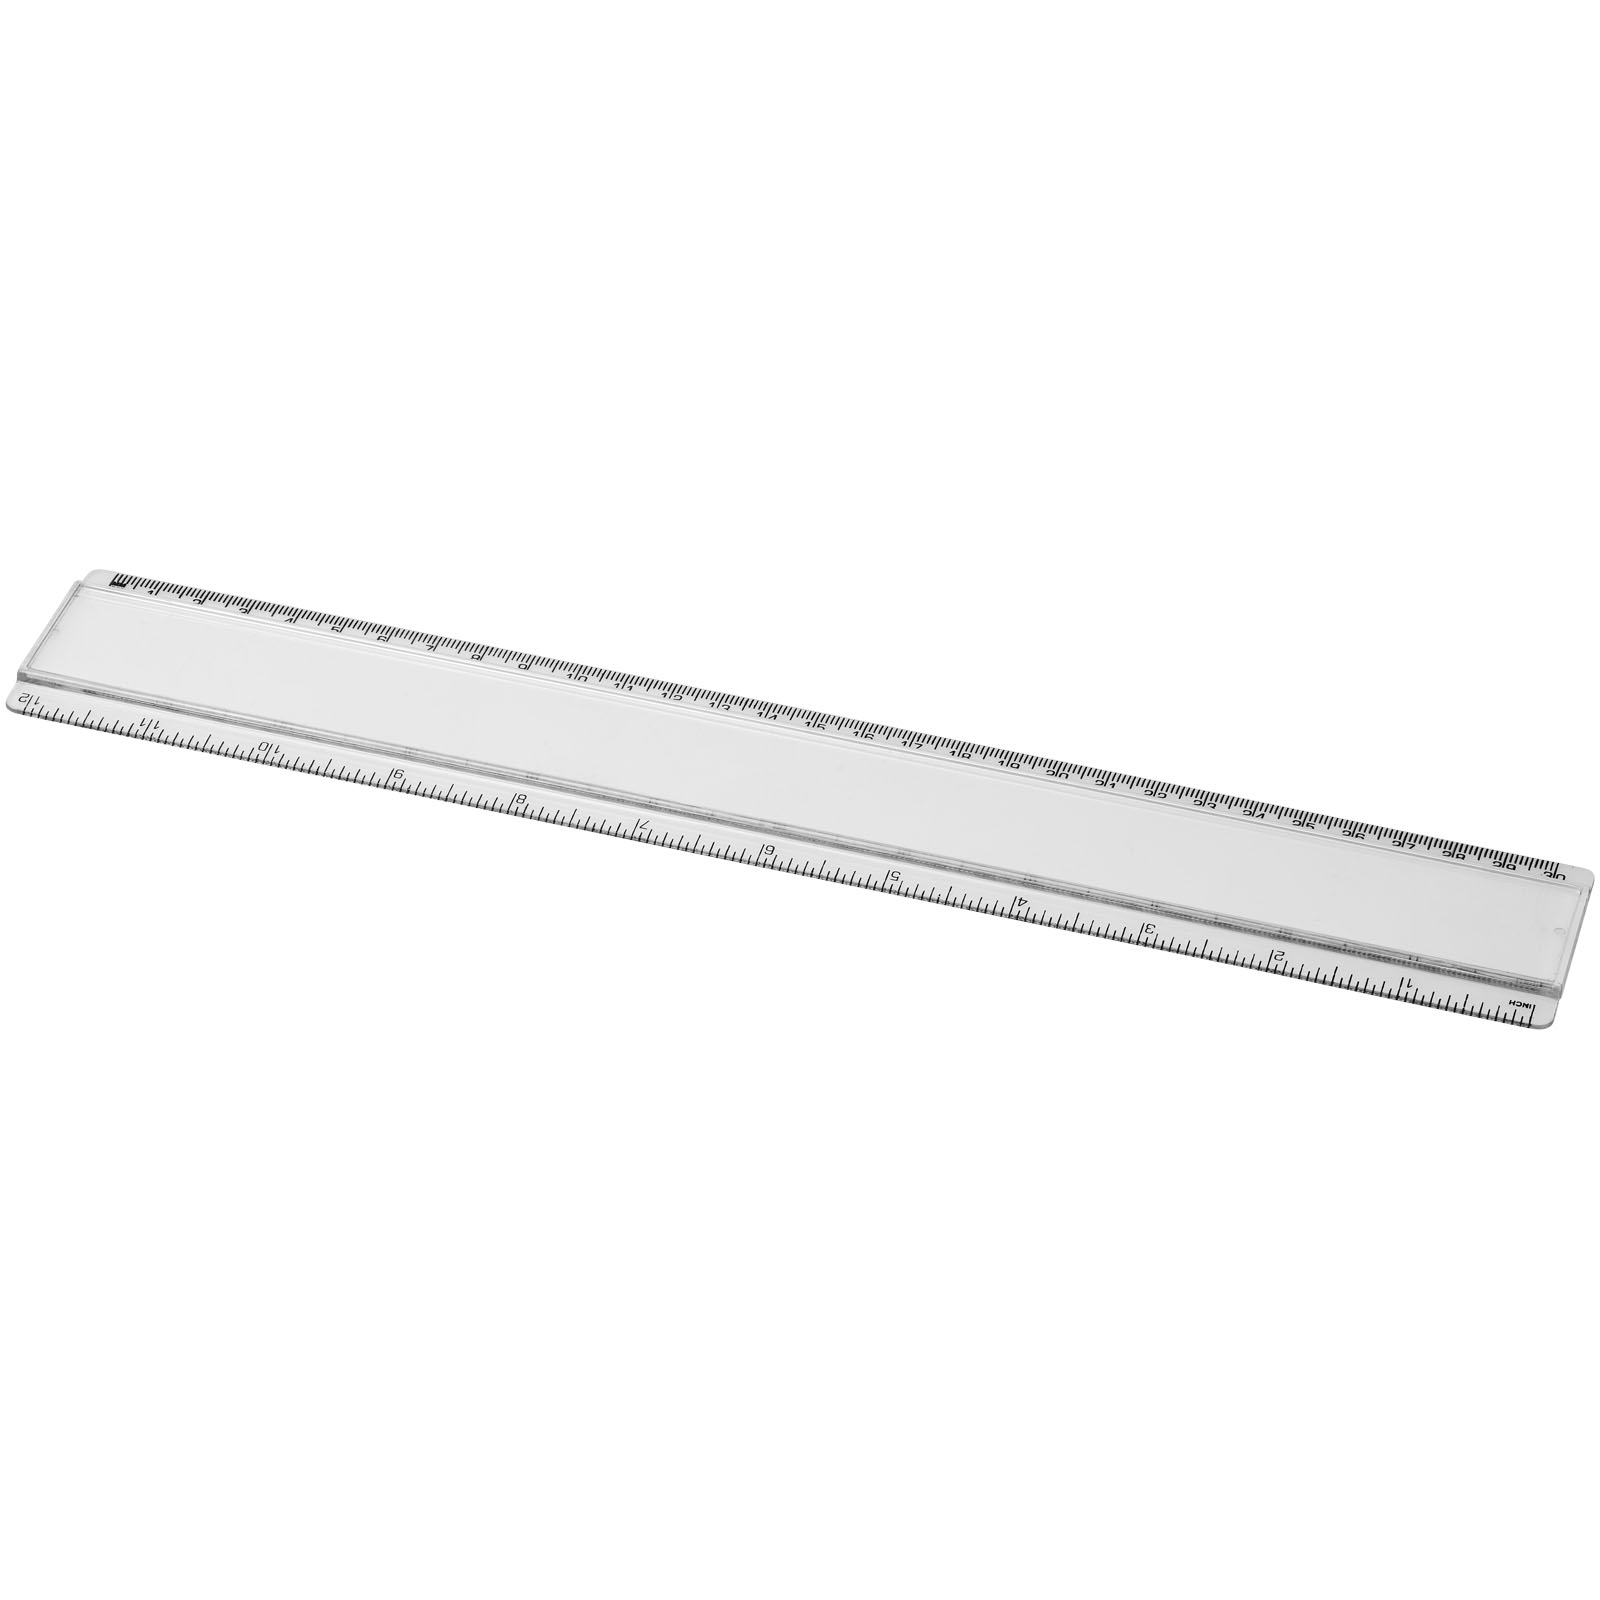 Desk Accessories - Ellison 30 cm plastic insert ruler